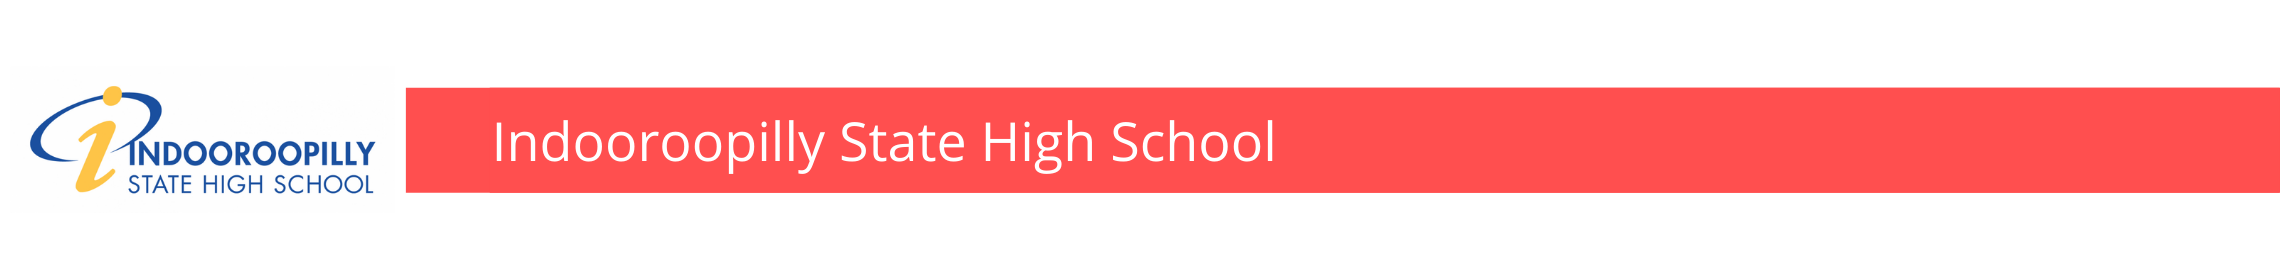 Indooroopilly State High School Banner